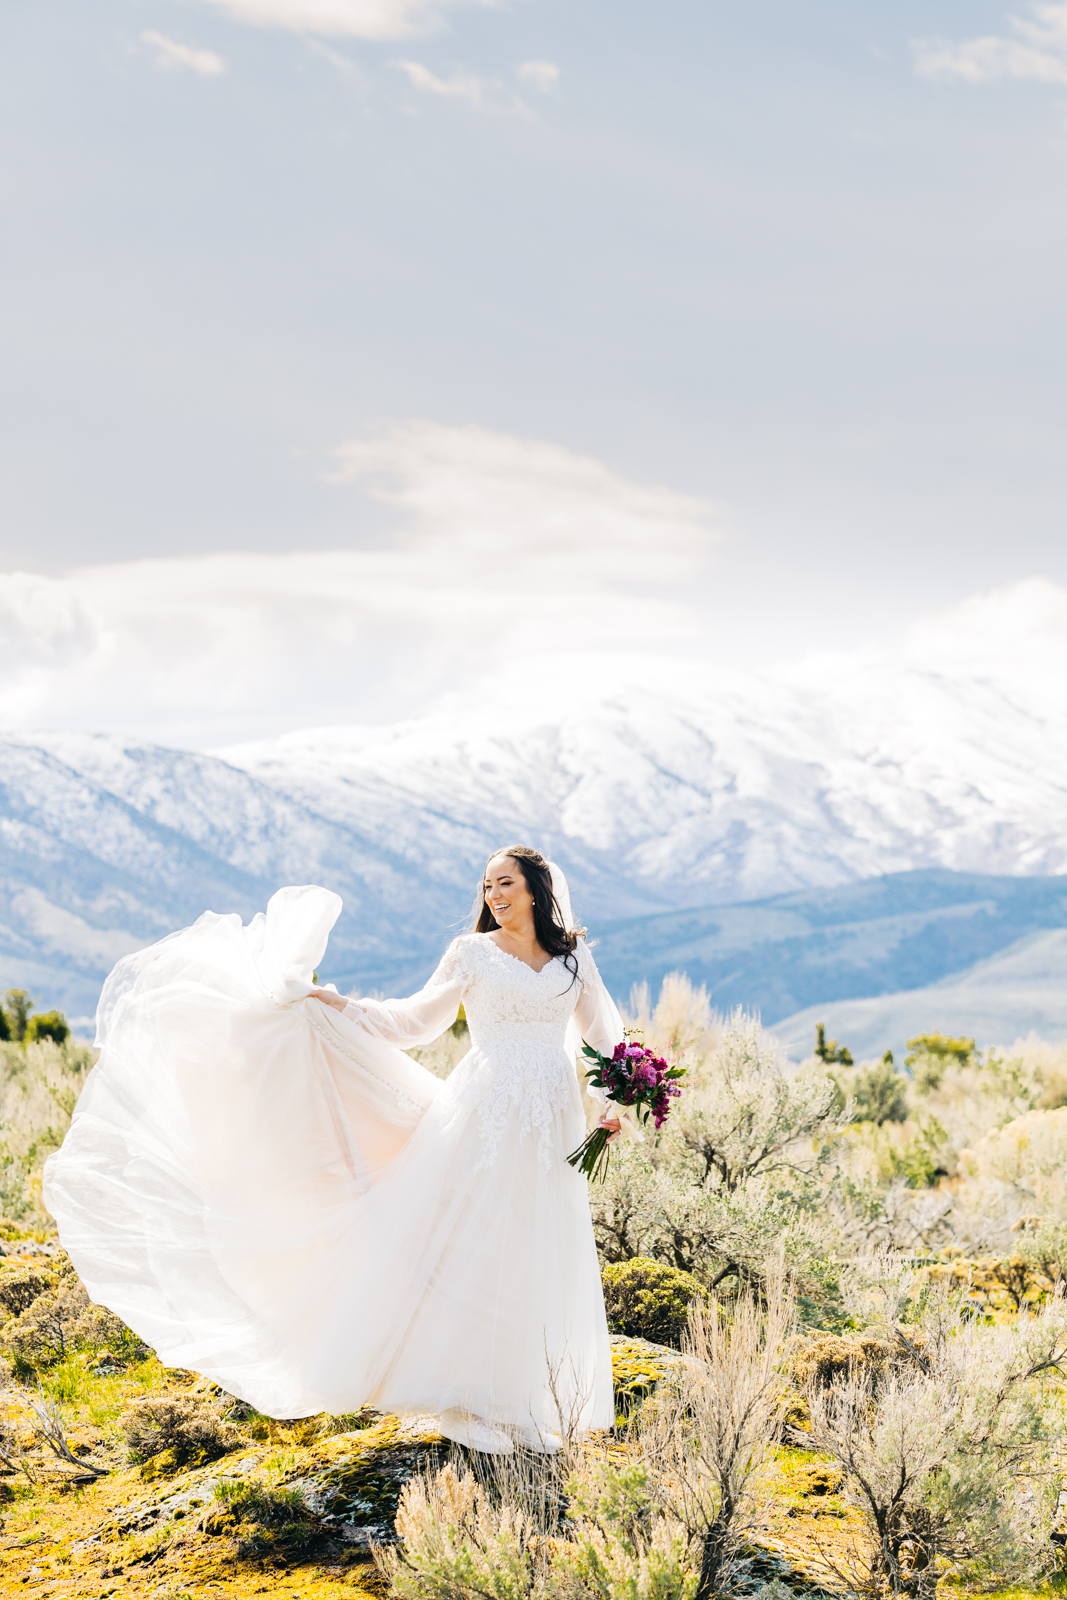 Jackson Hole wedding photographers capture adventure elopement bride in jackson hole